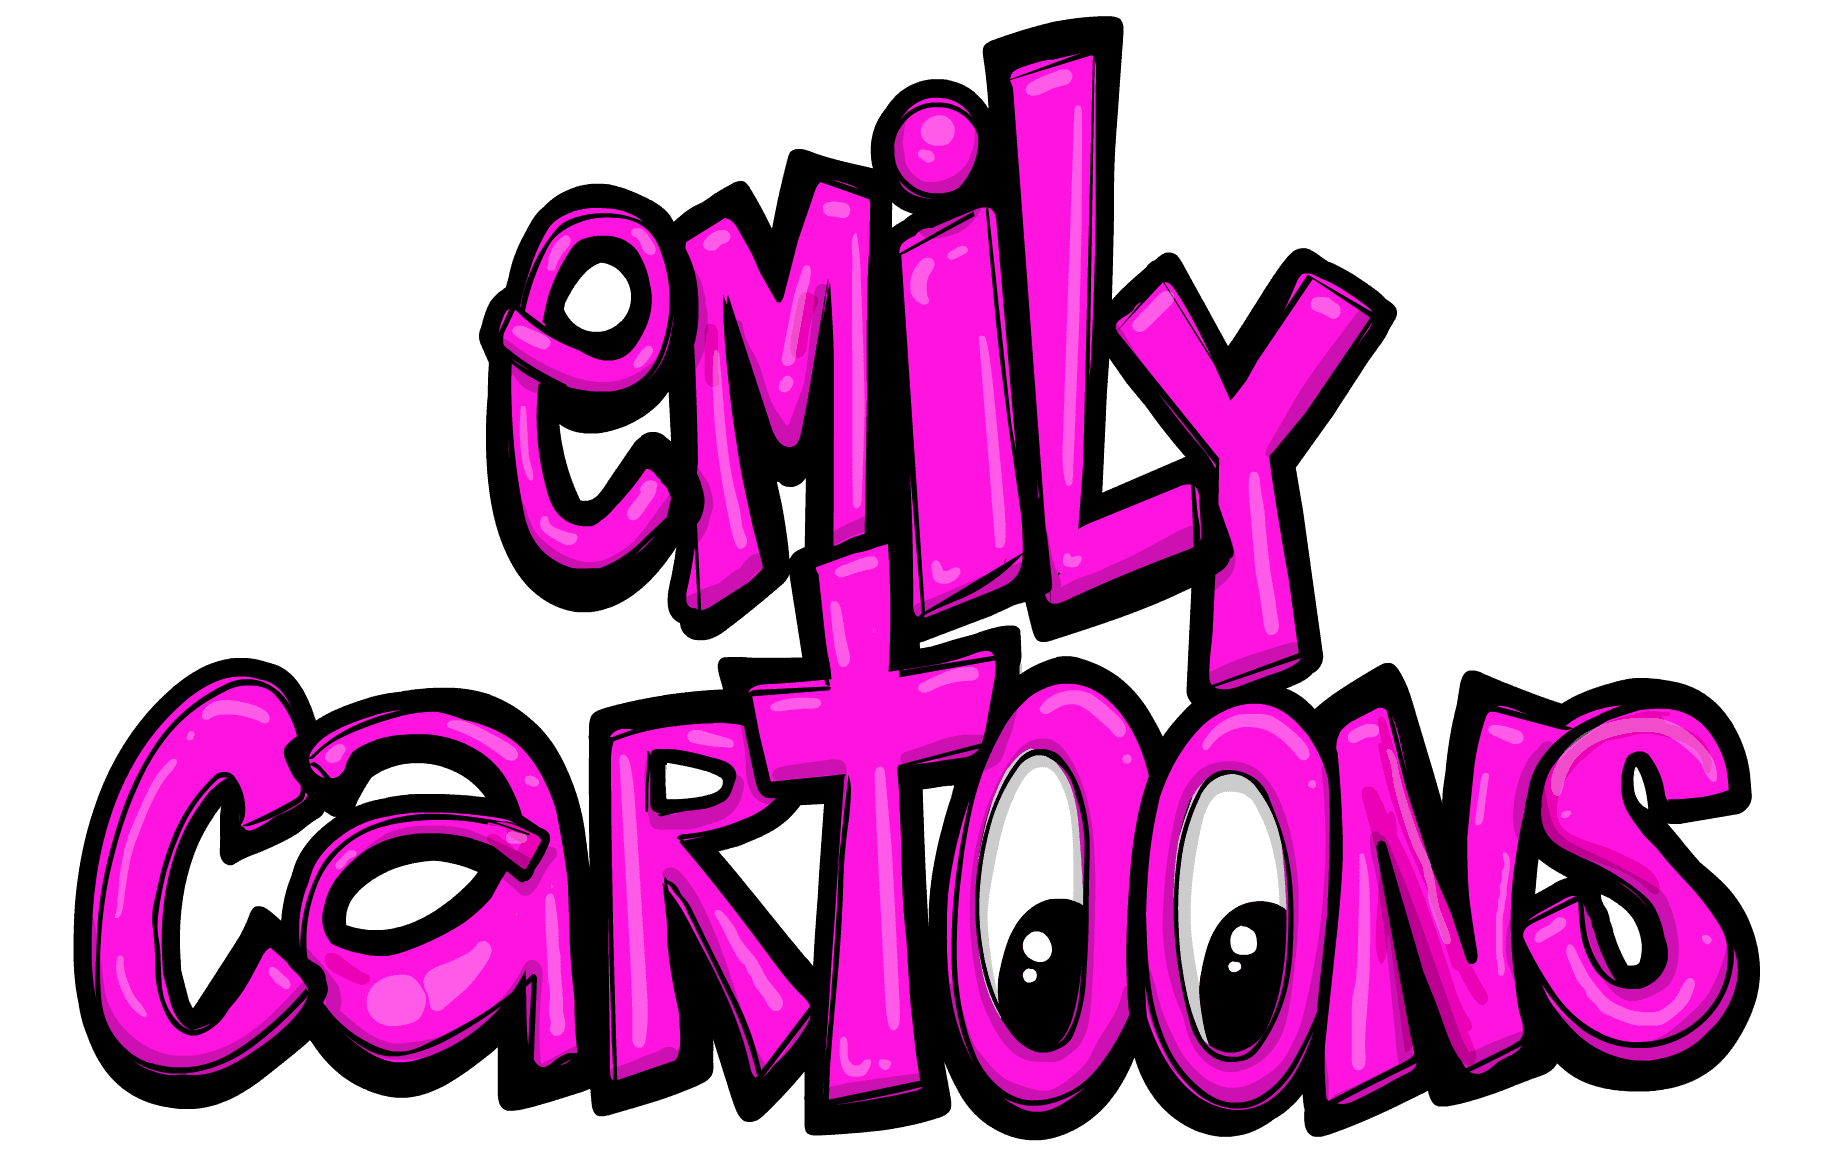 EmilyCartoons